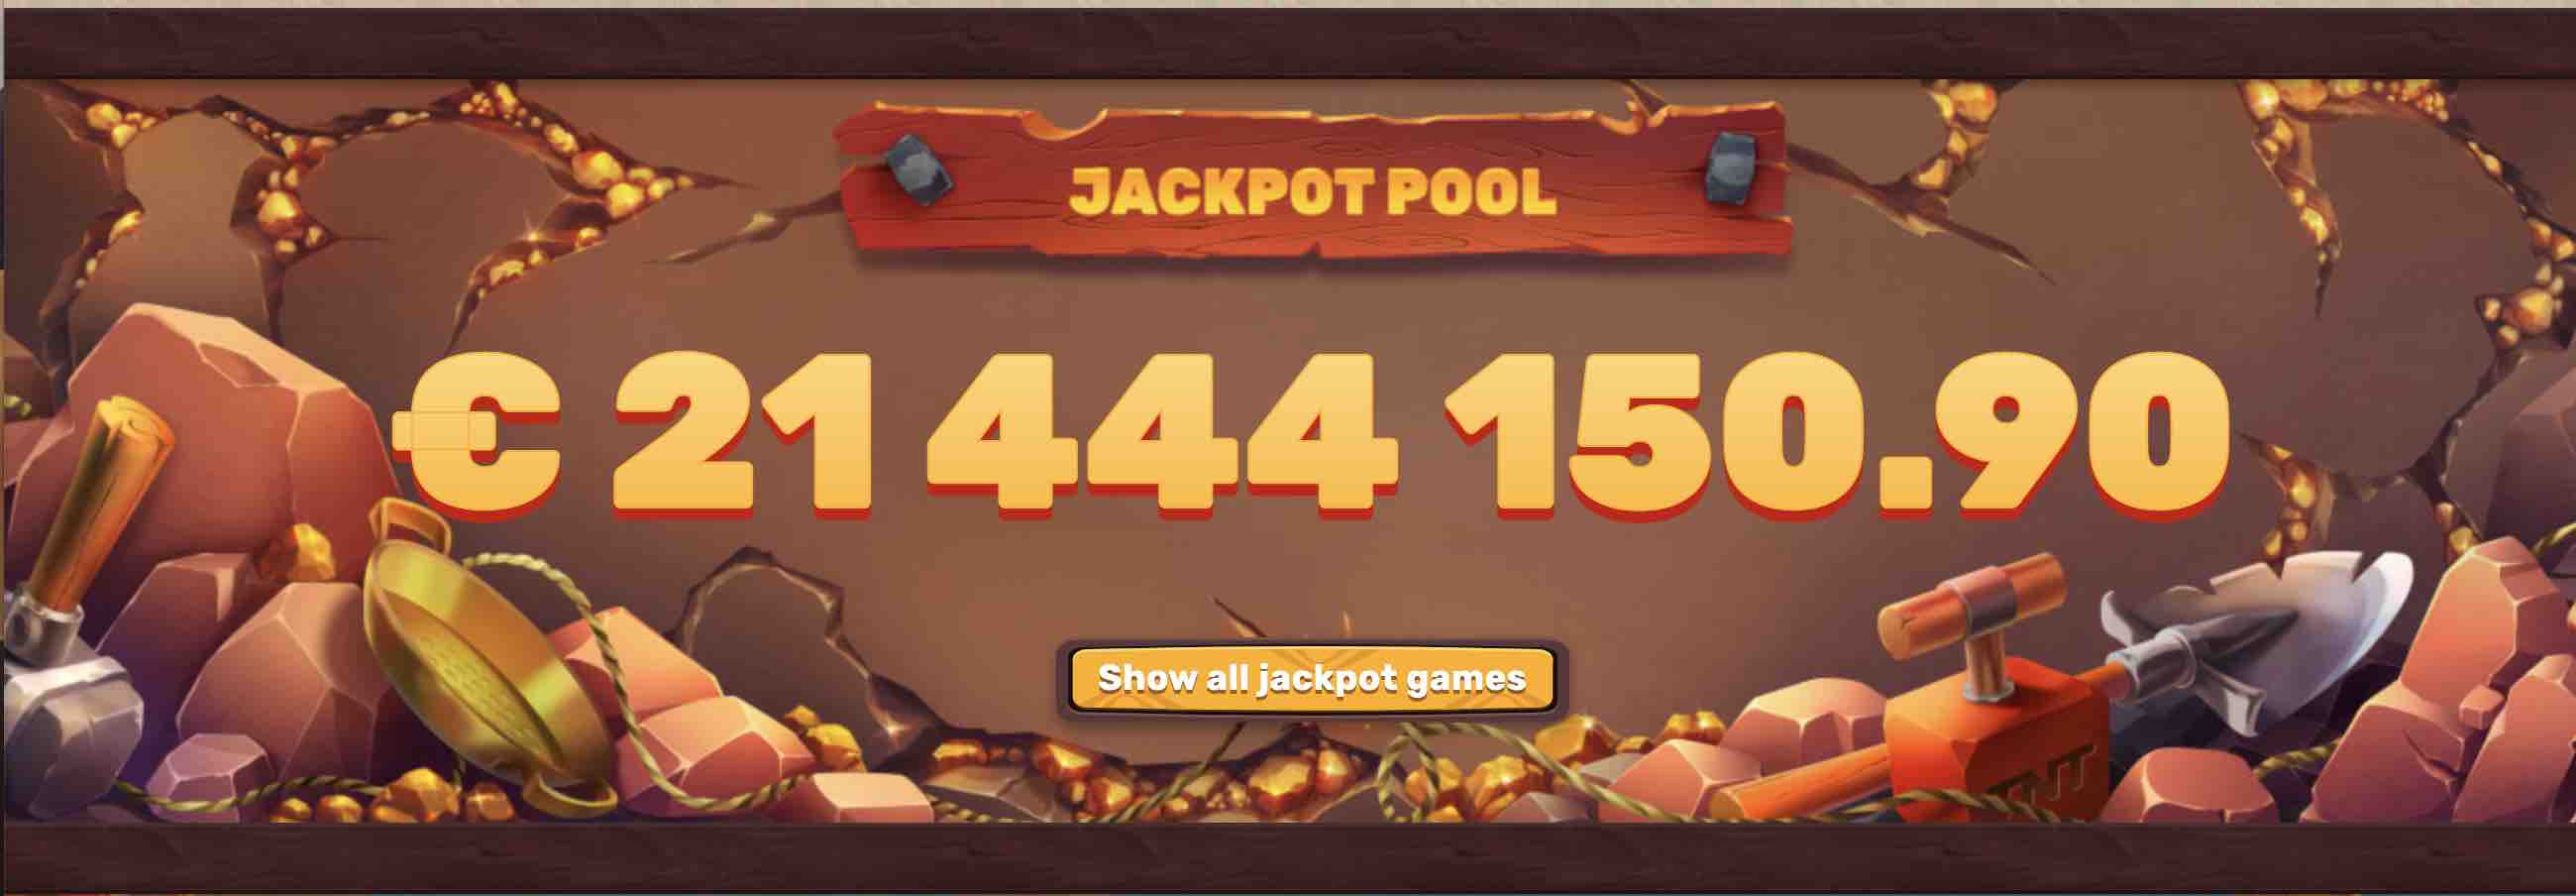 casino online slot